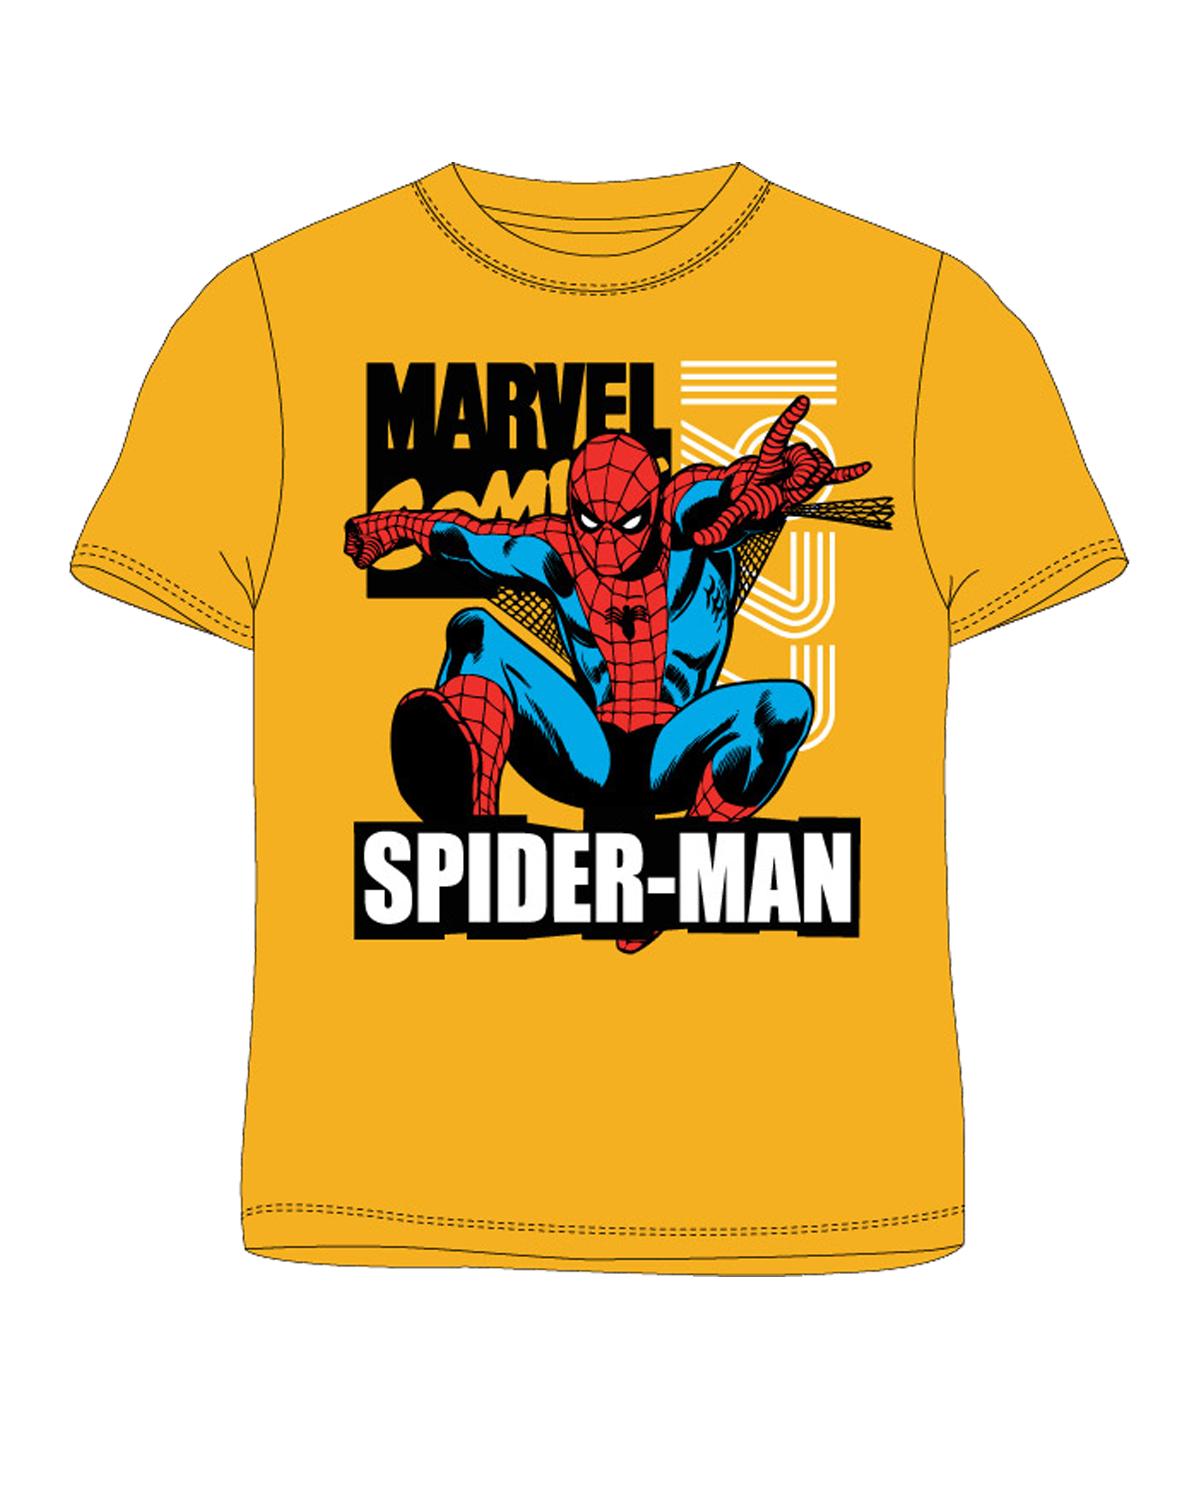 Spider Man - licence Chlapecké tričko - Spider-Man 52021447, žlutá Barva: Žlutá, Velikost: 110